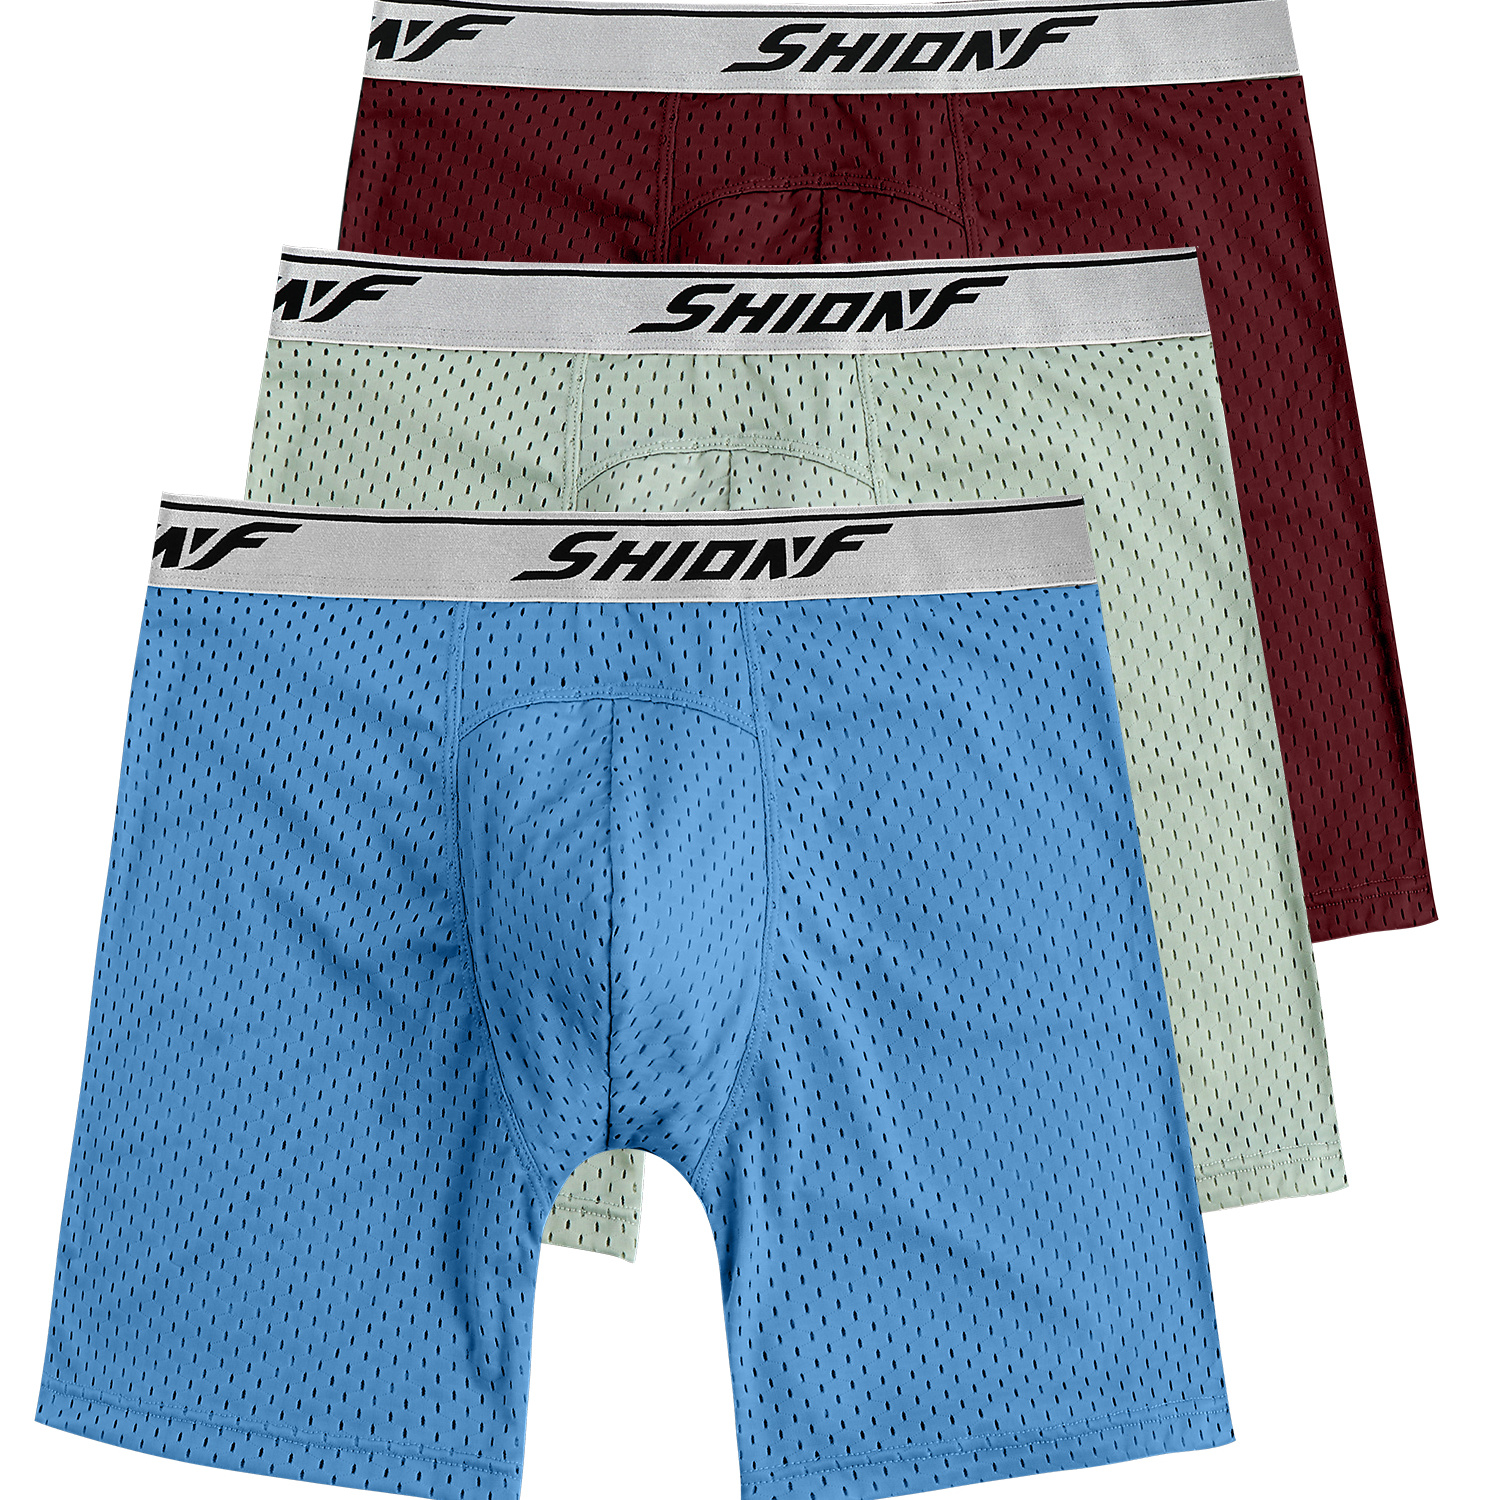  Ouruikia Men's Underwear Silky Smooth Boxer Briefs